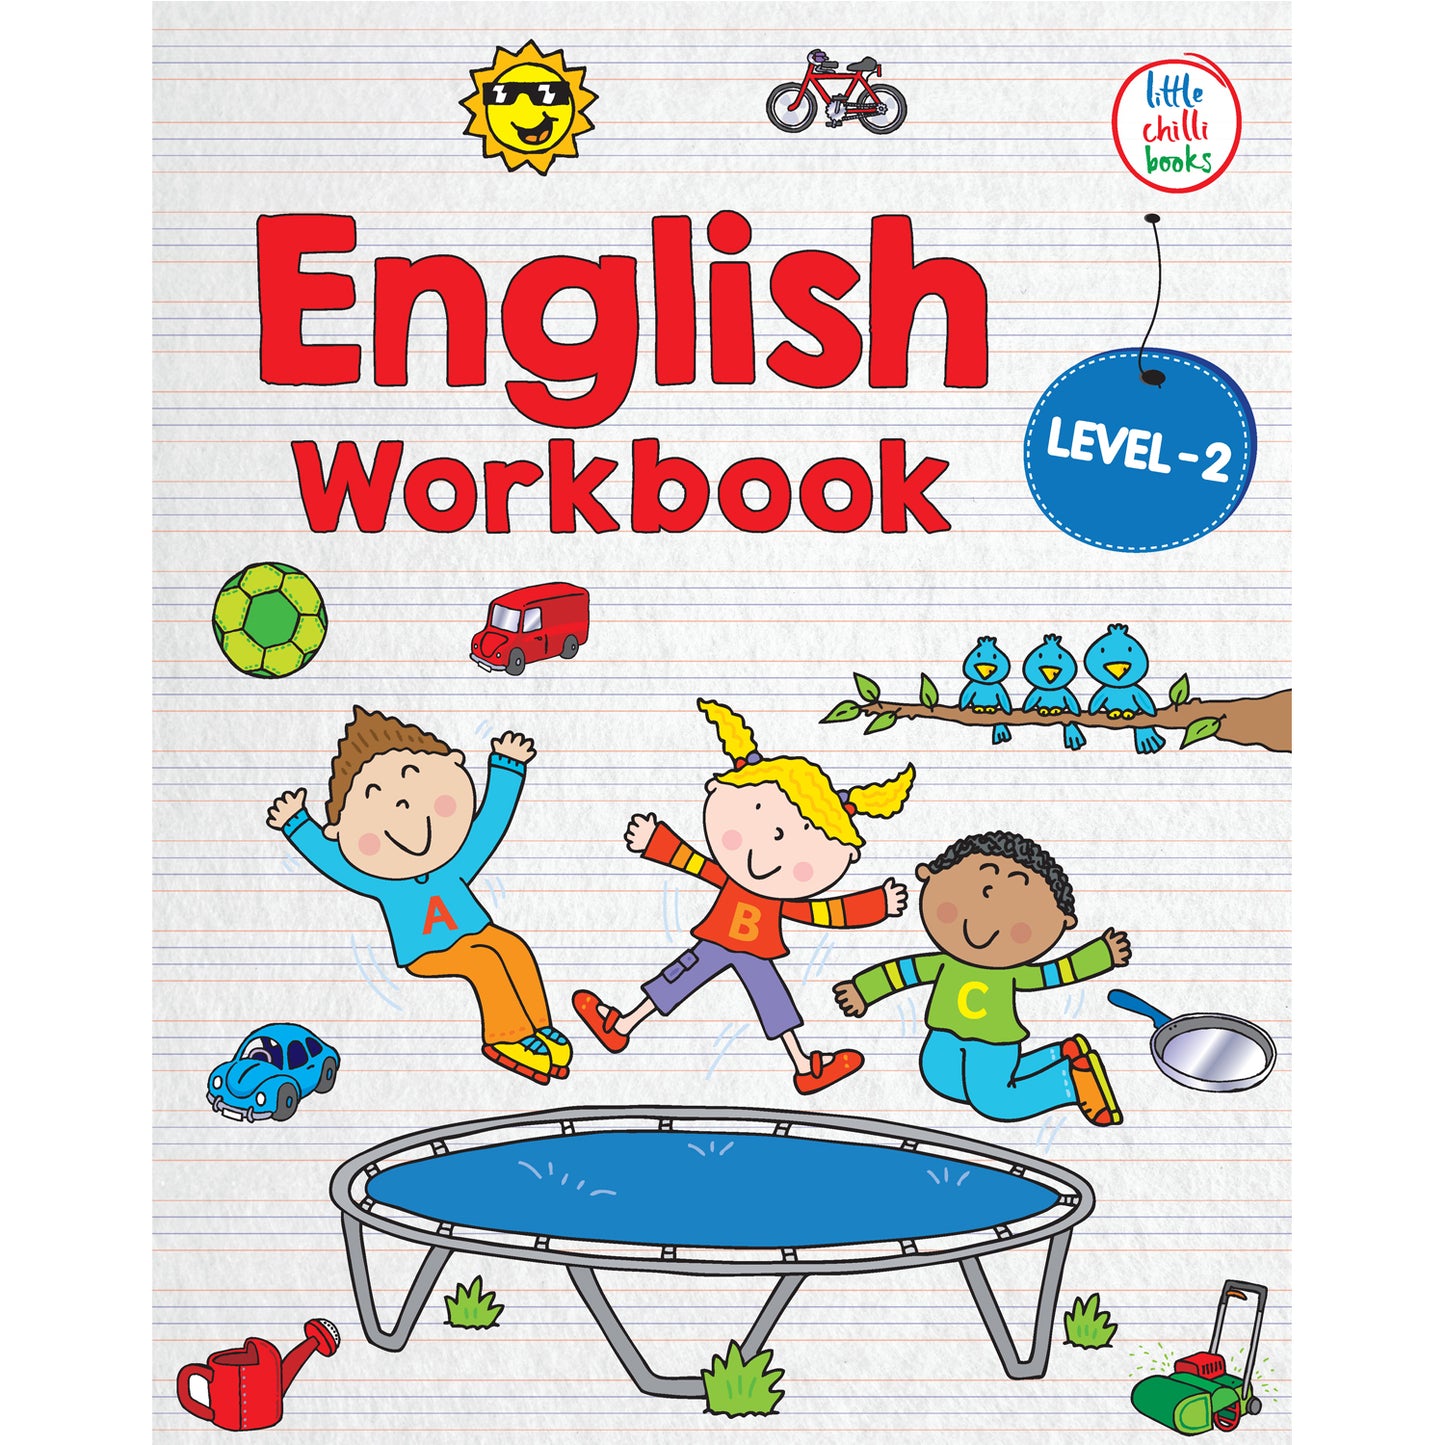 English Workbook LEVEL-2 [Paperback]